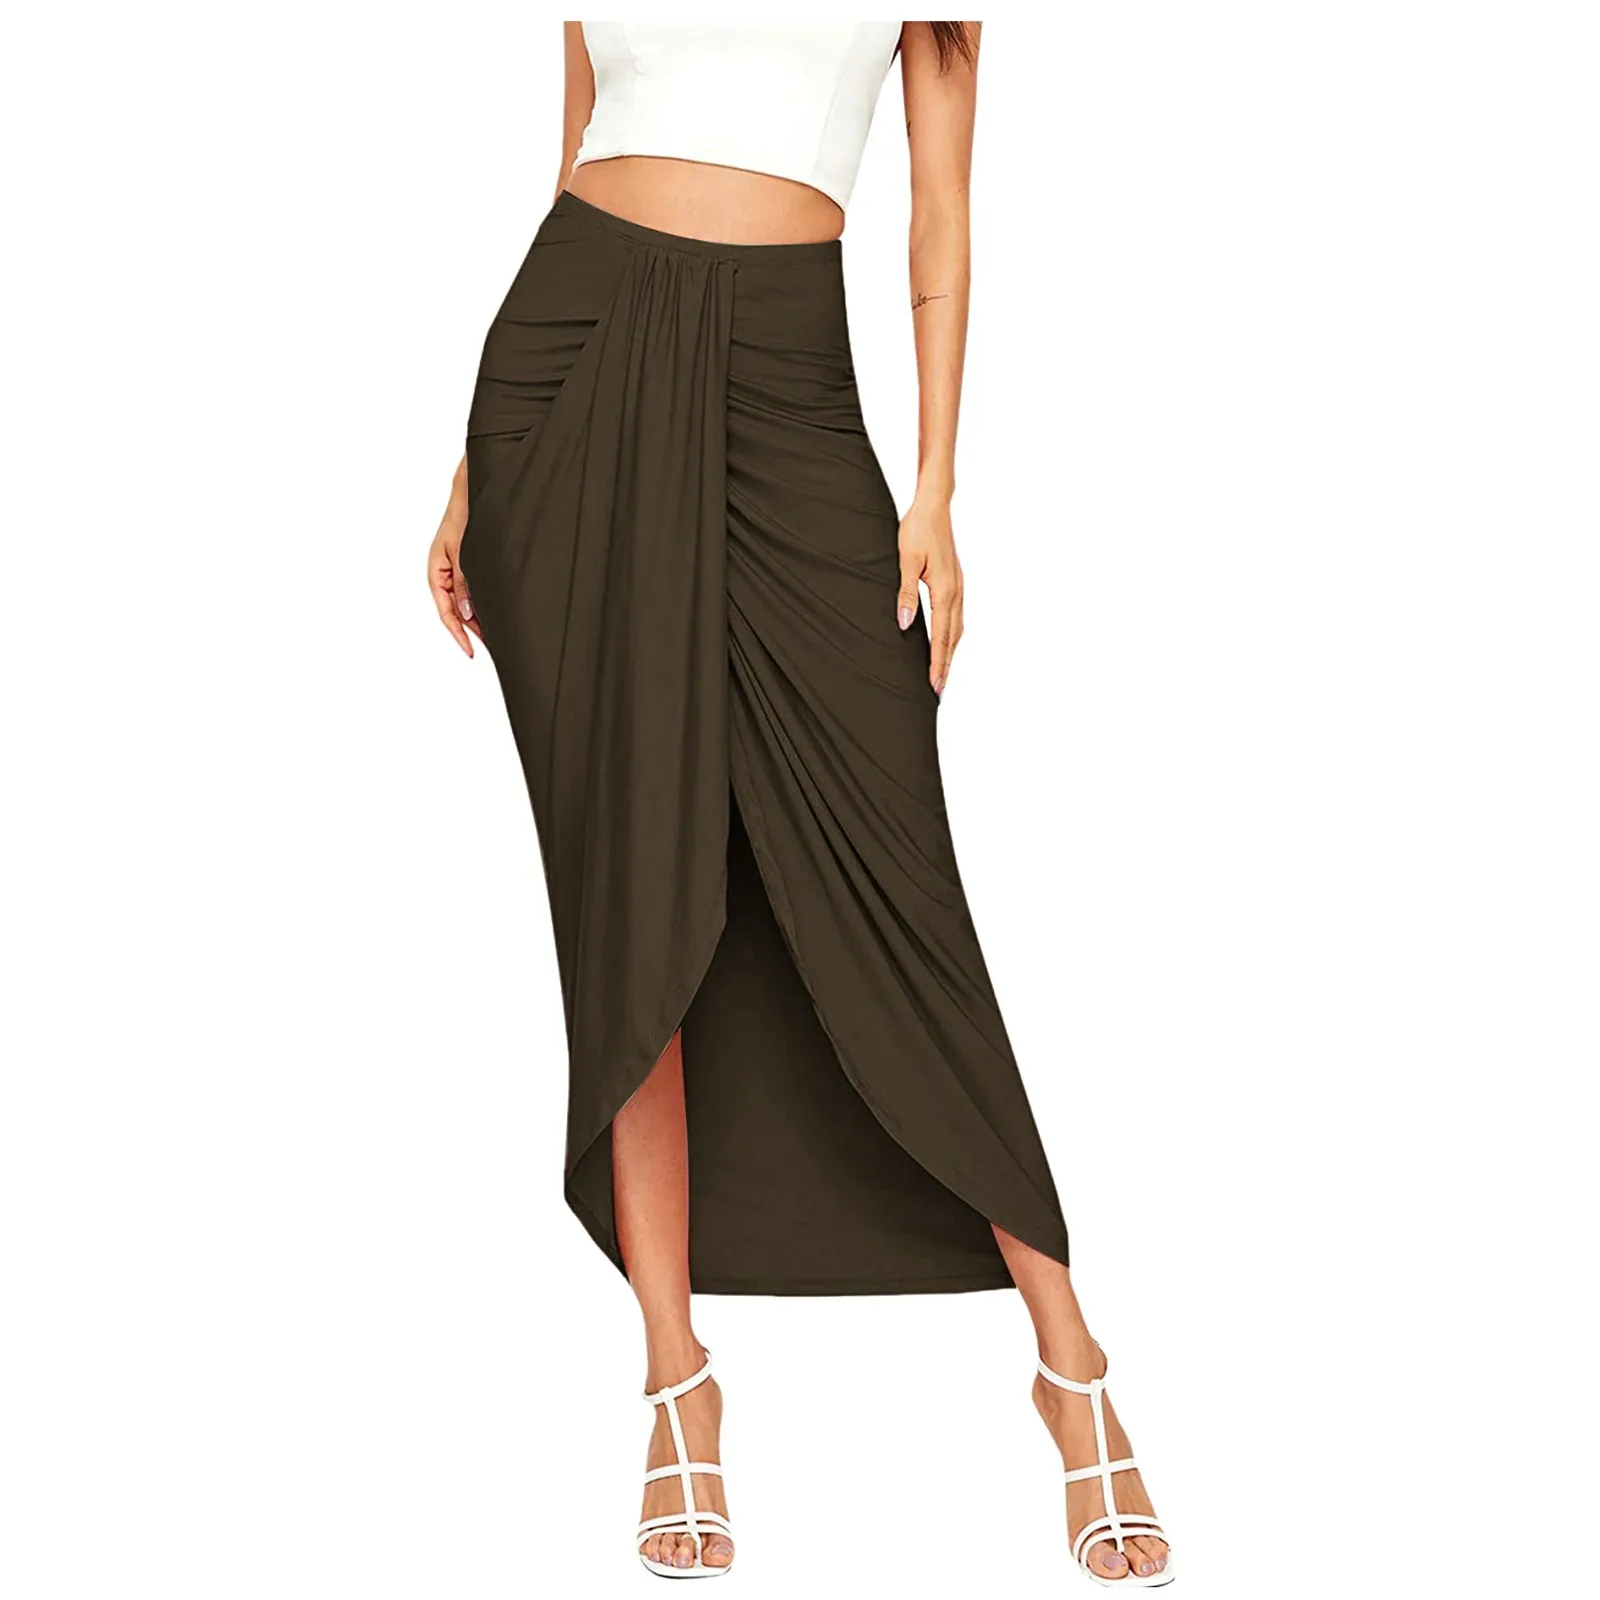 

Womail Women's Fashion Casual Slit Wrap Asymmetrical Elastic High Waist Skirt Maxi Draped Solid Long Skirt 2021 New Mujer Faldas